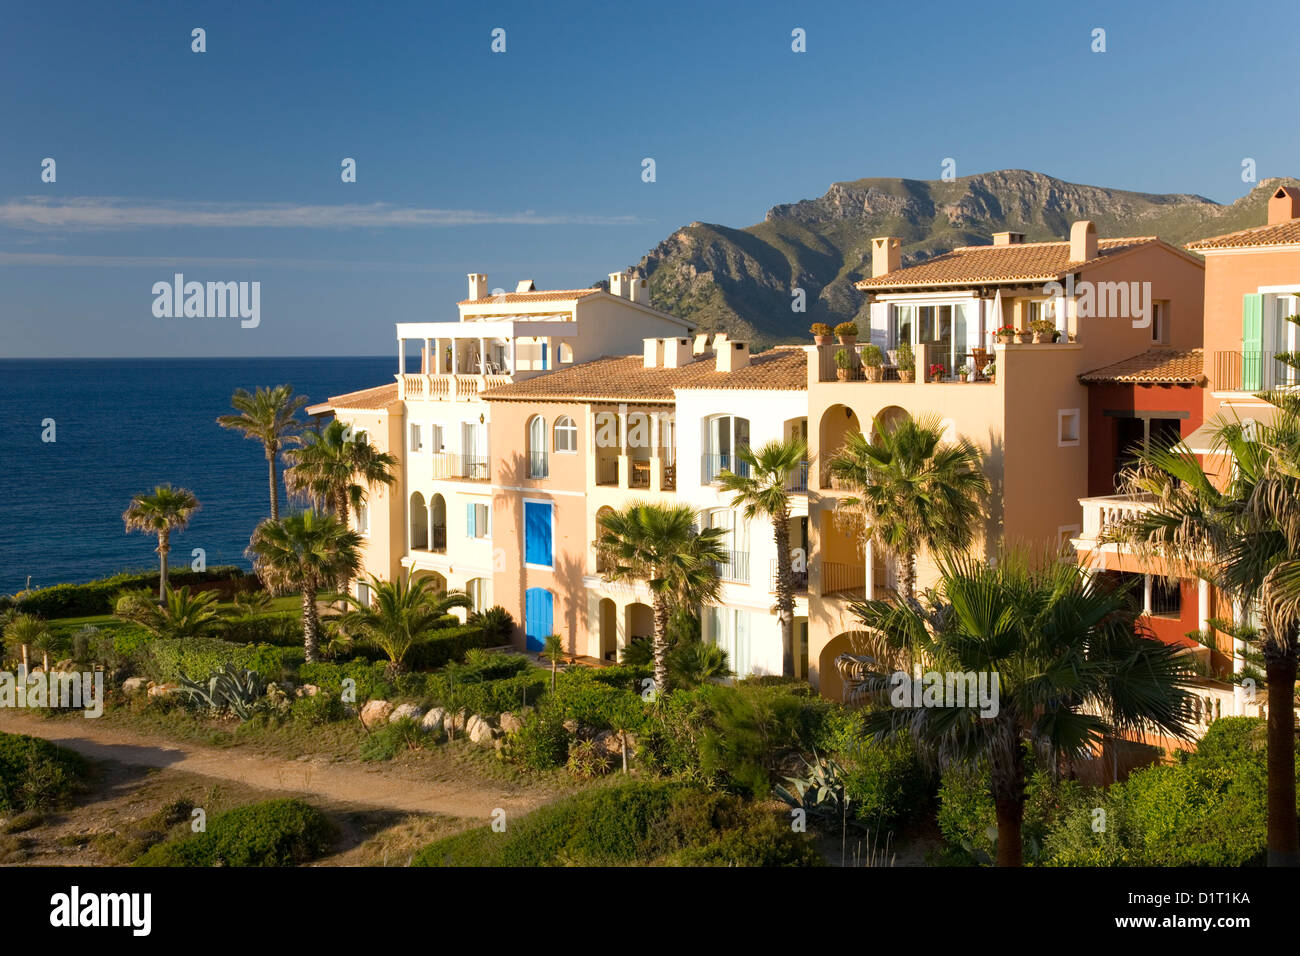 Colònia de Sant Pere, Mallorca, Balearic Islands, Spain. Luxury seafront apartment complex overlooking the Mediterranean. Stock Photo